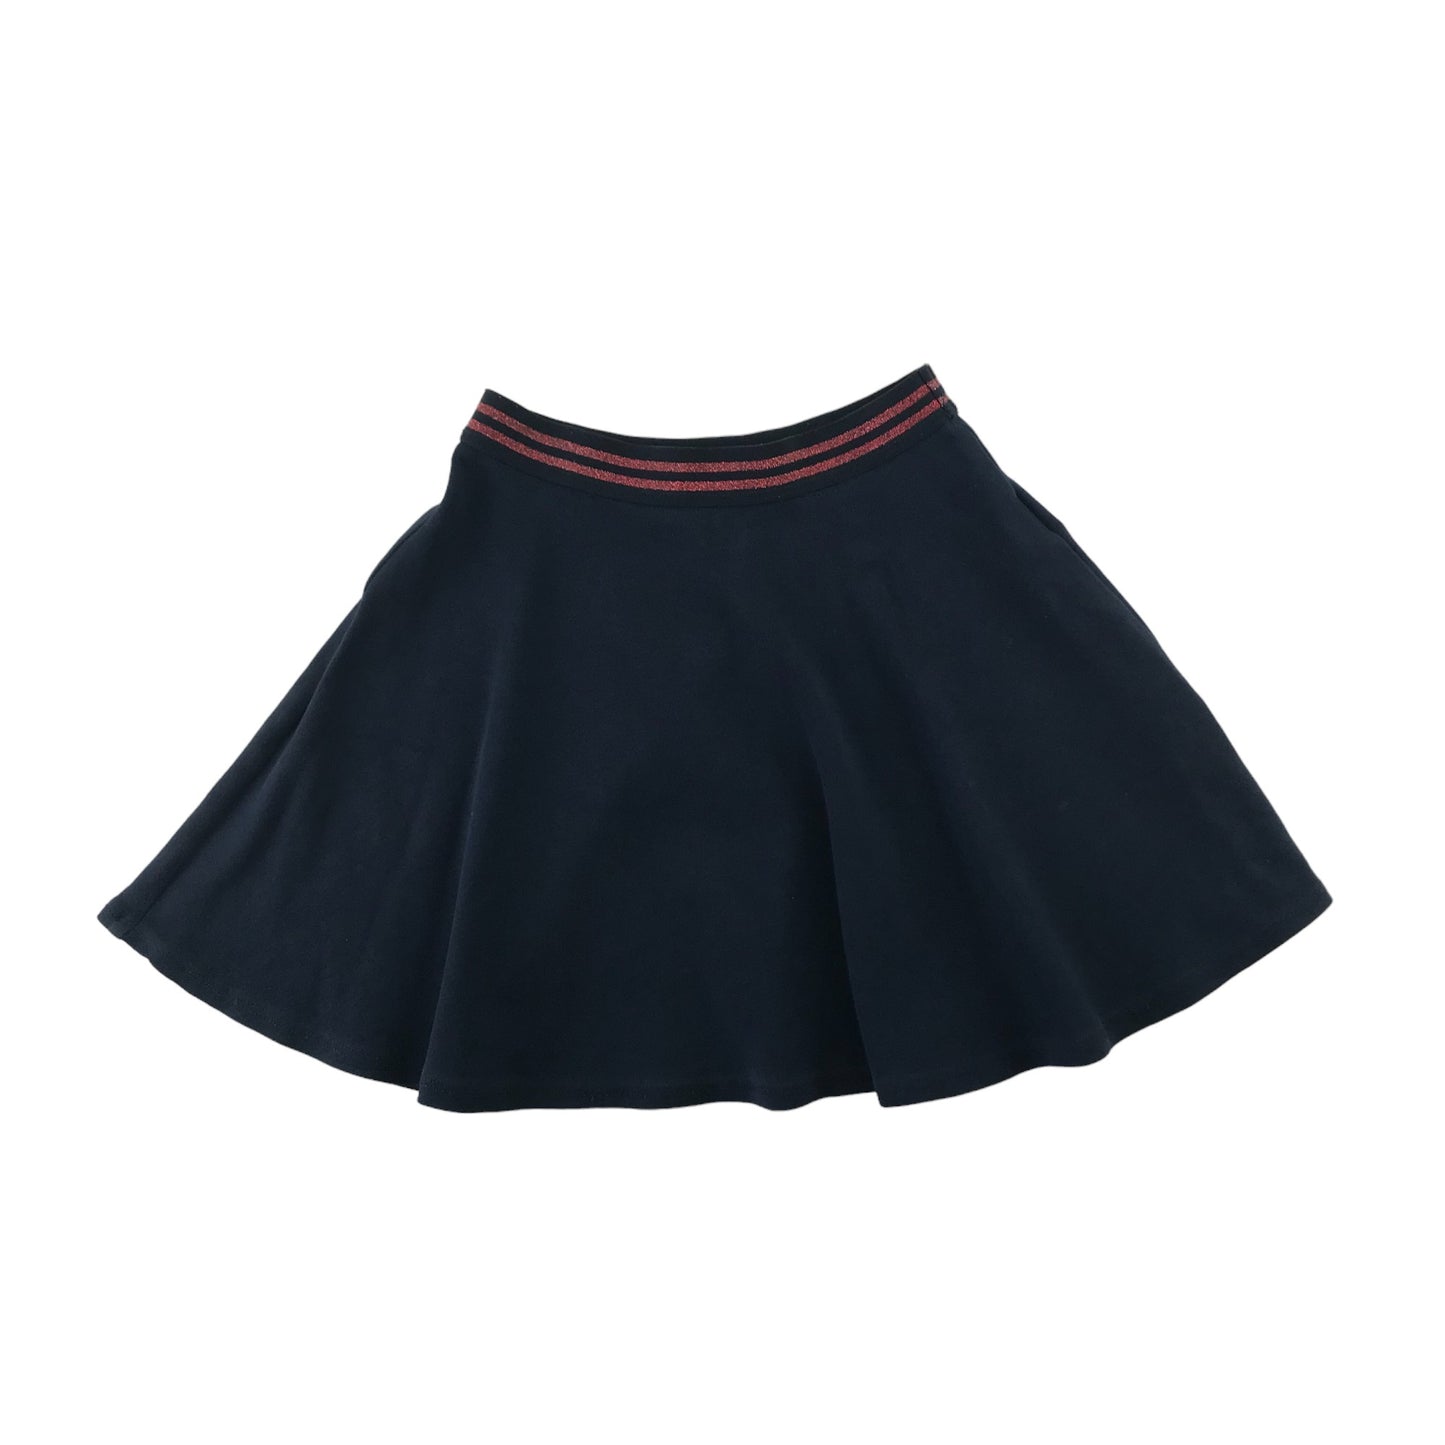 Galeries Lafayette Skirt Age 10 Navy Glittery Waist Band Jersey